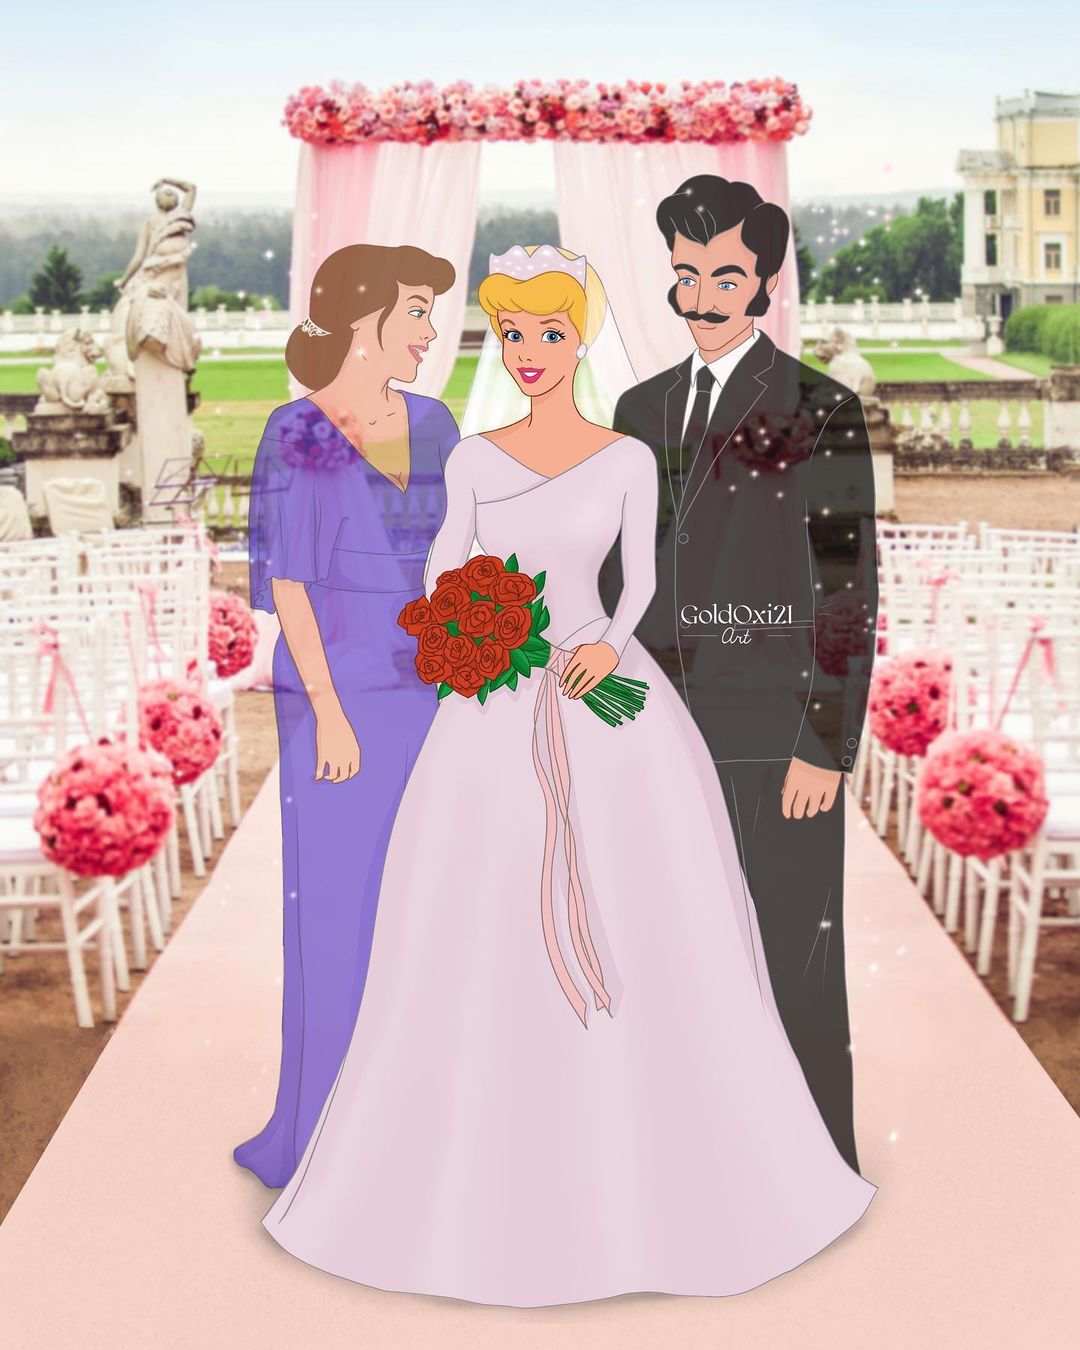 keluarga princess 5 - Harmonis, 10 Potret Pernikahan Princess Disney Bersama Kedua Orangtuanya